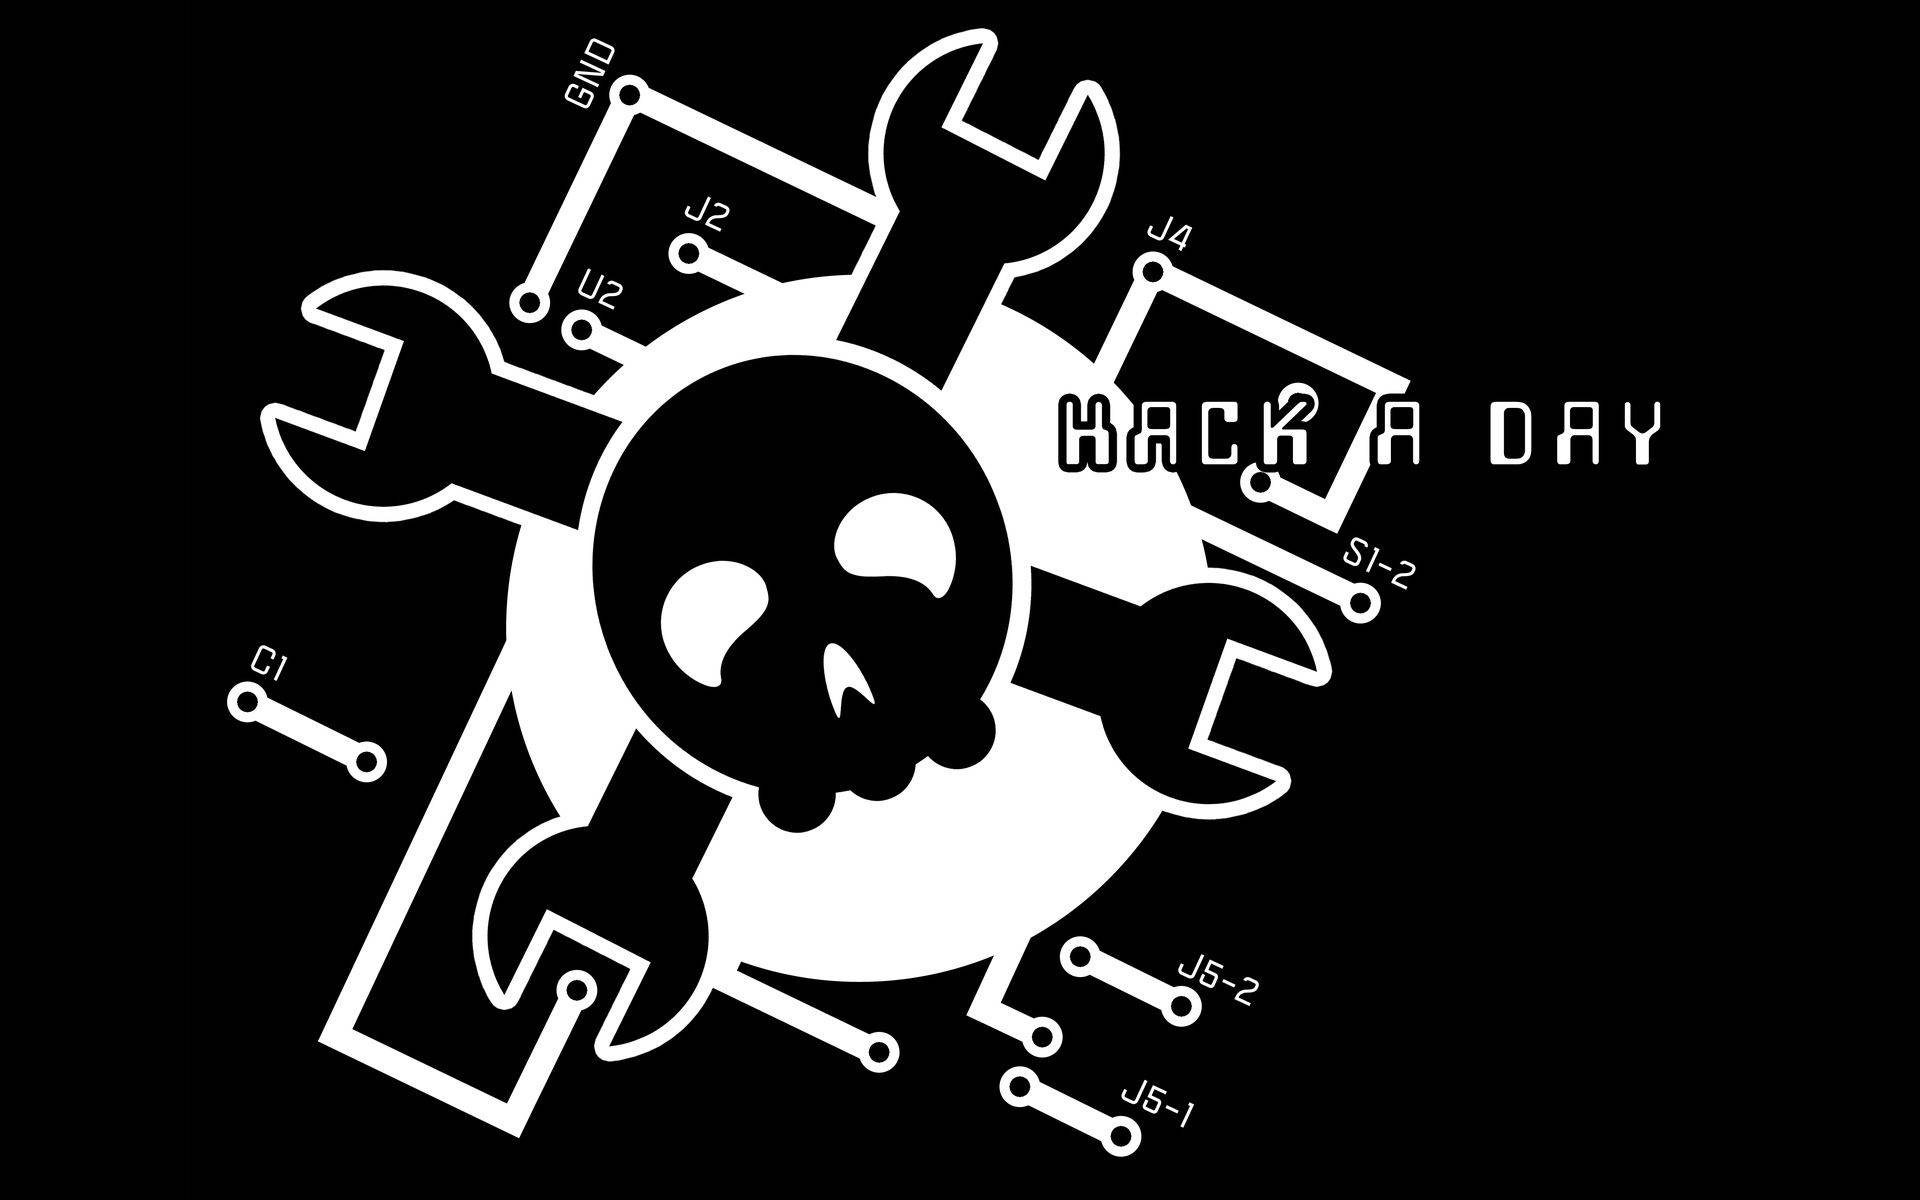 Hacka Day Logotyp Full Hd Wallpaper